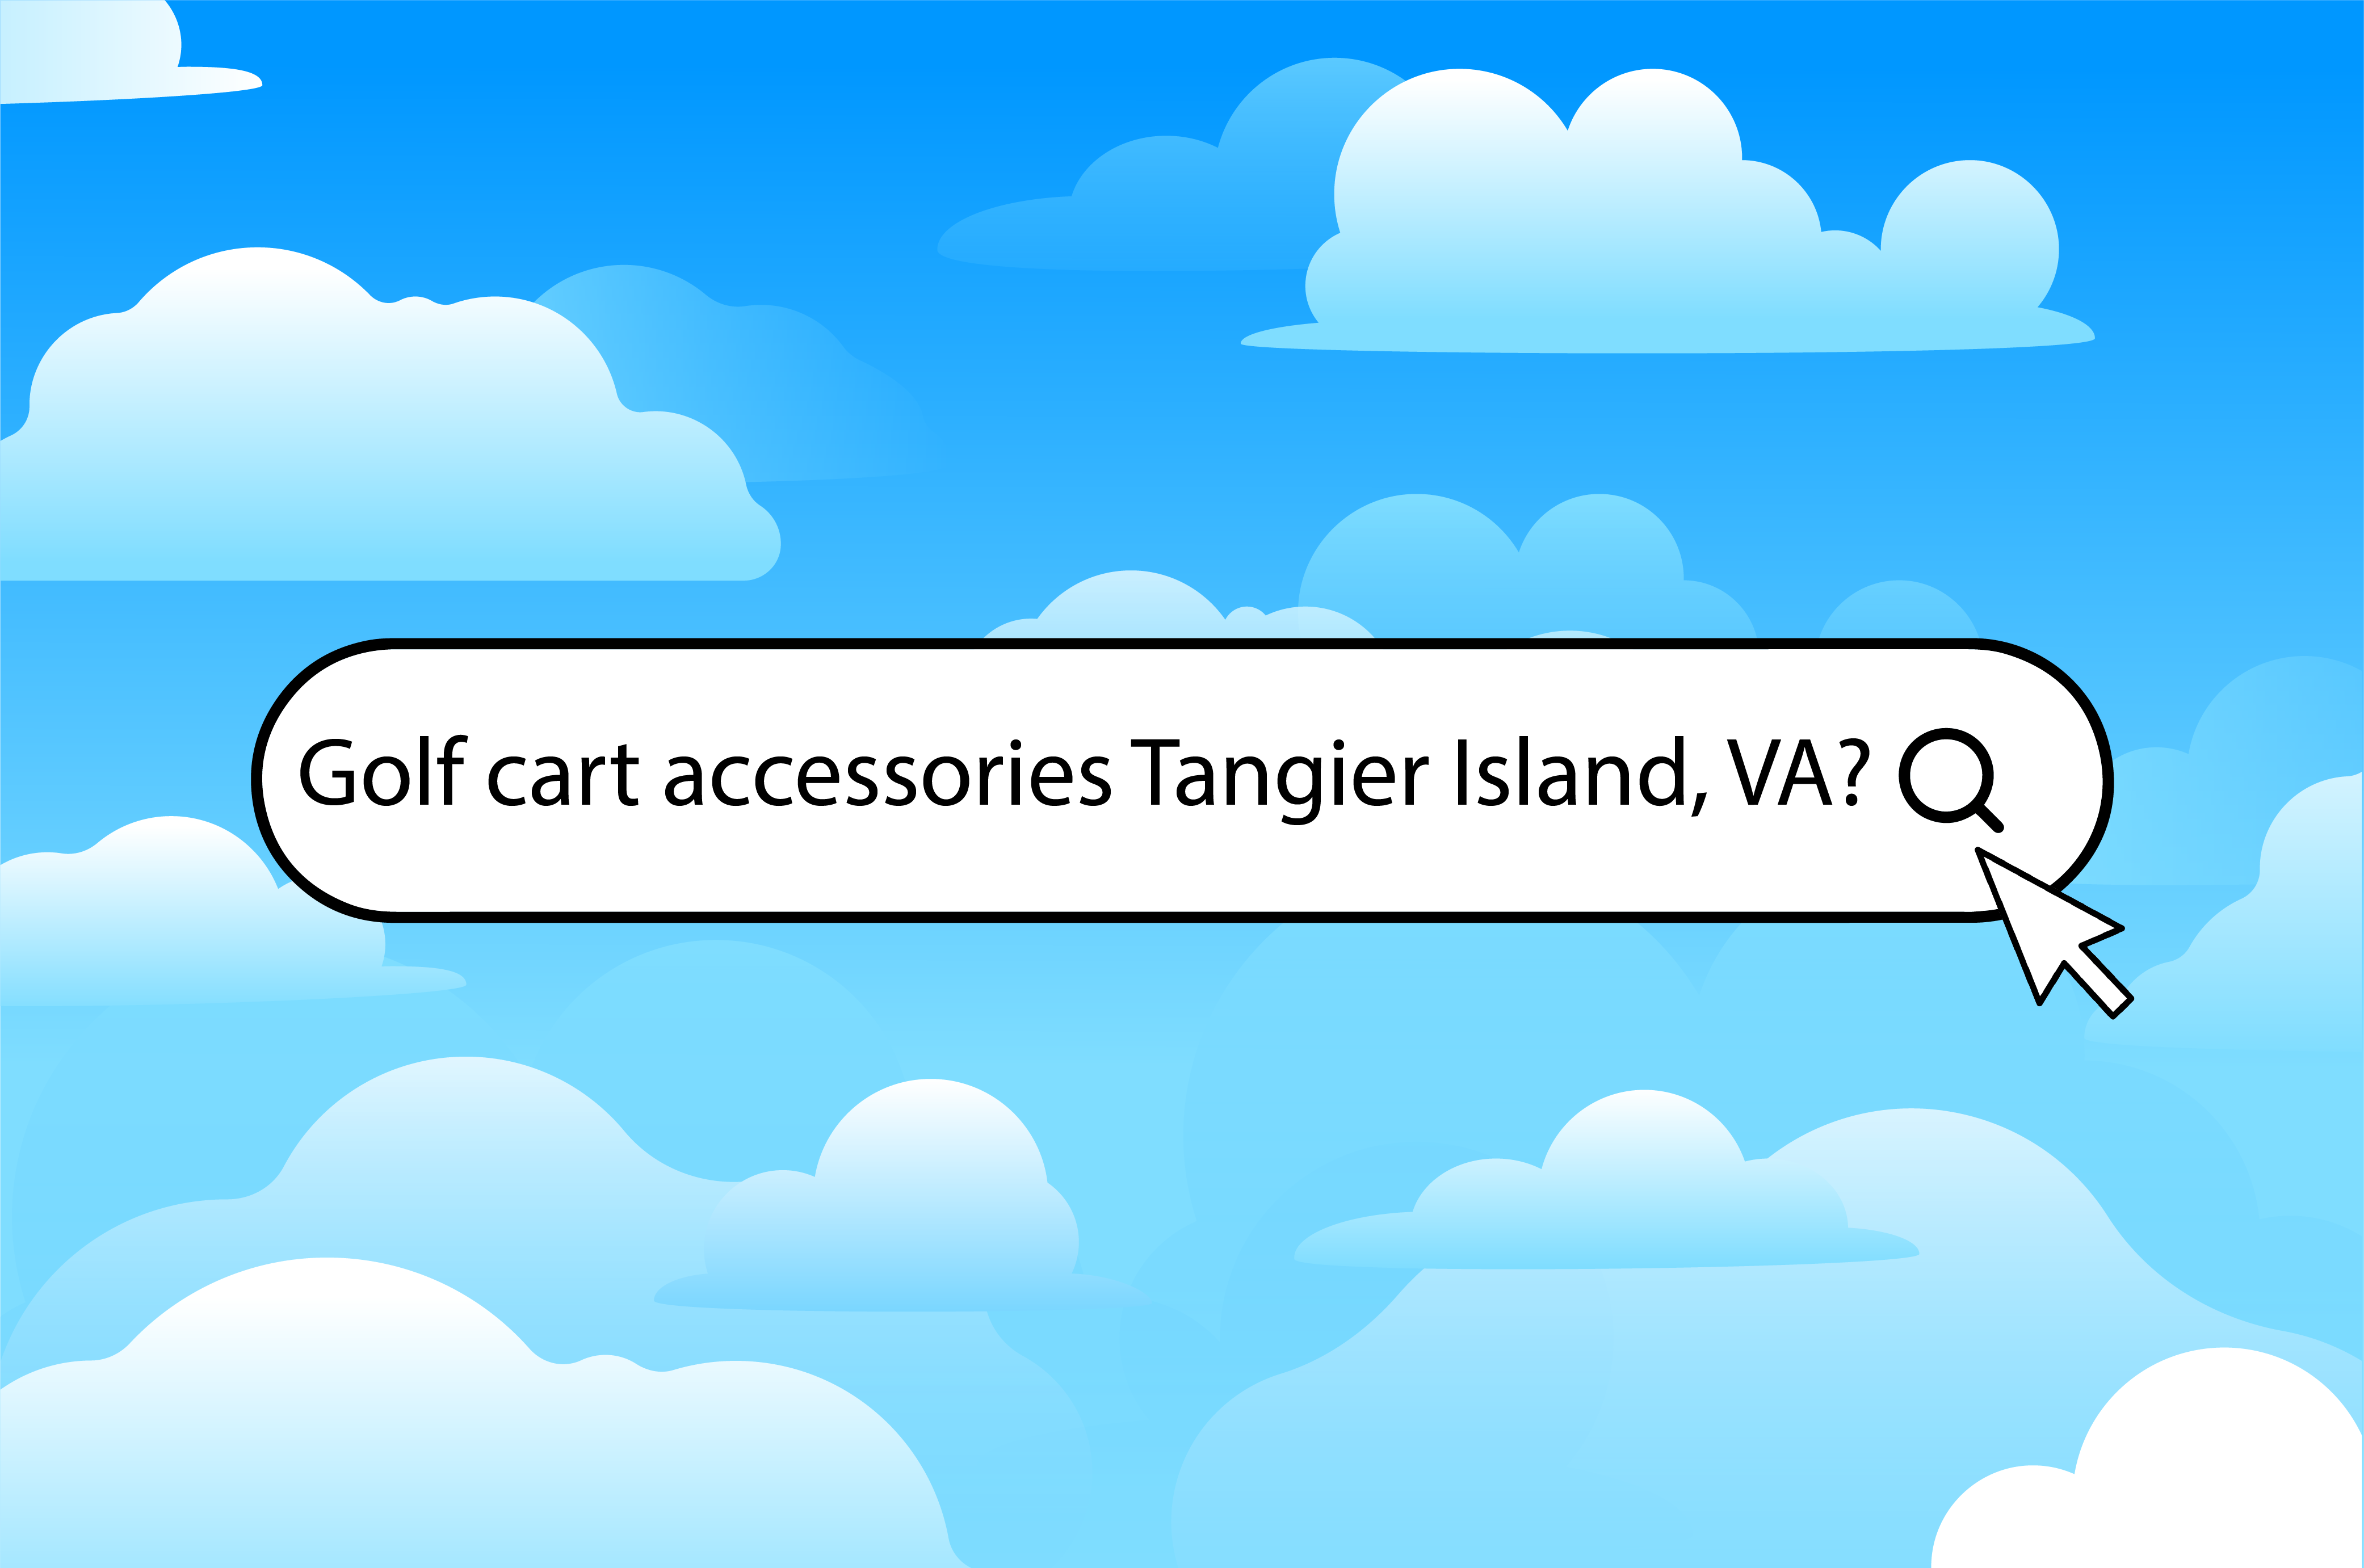 Three ways to find golf cart accessories in Tangier Island, VA